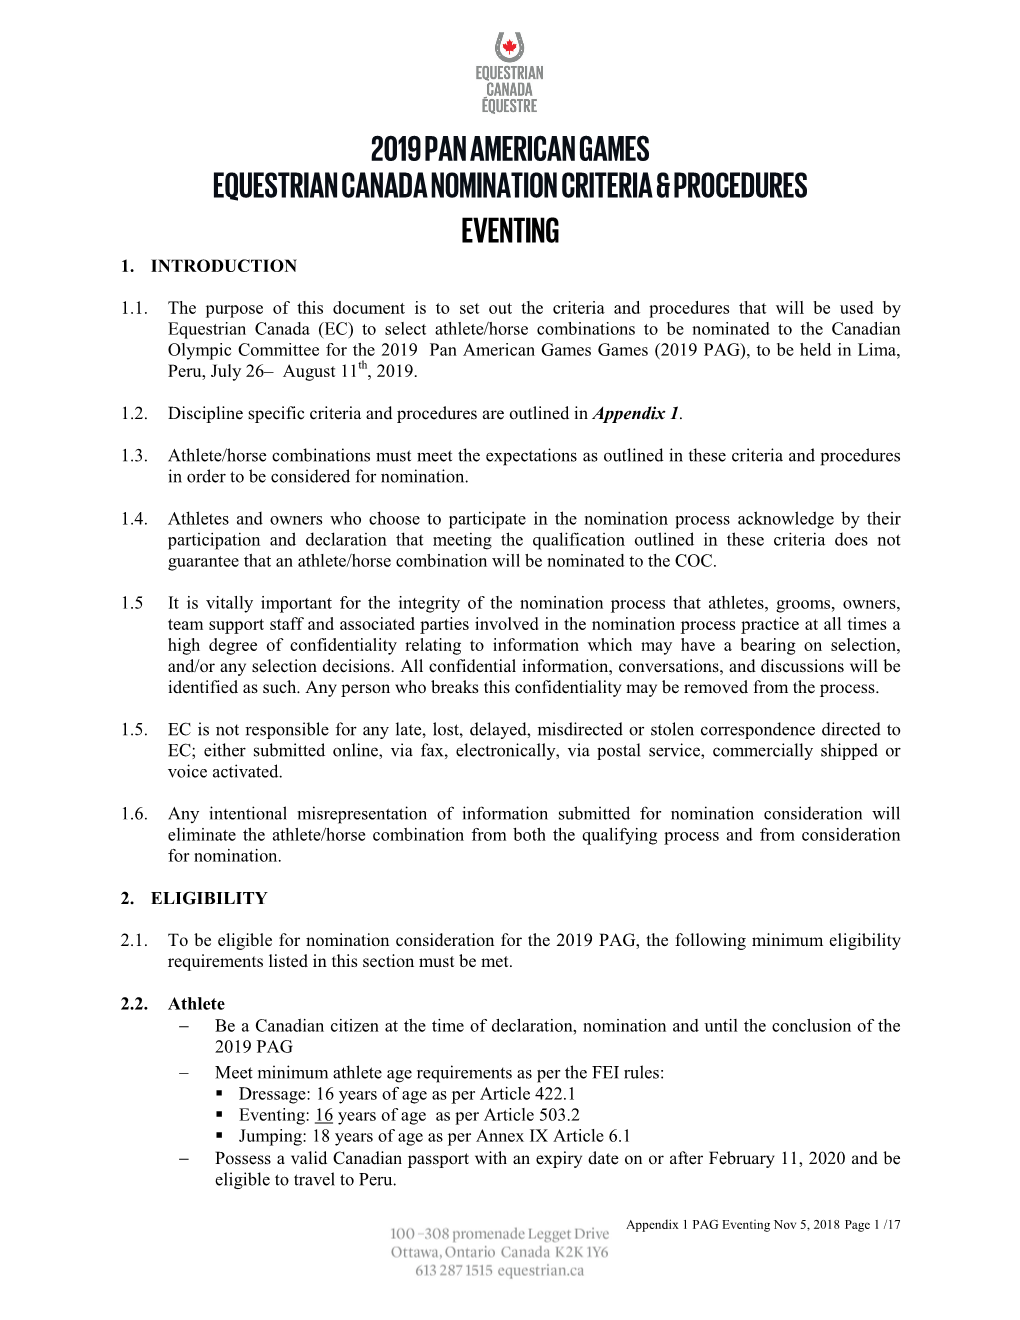 2019 Pan American Games Equestrian Canada Nomination Criteria & Procedures Eventing